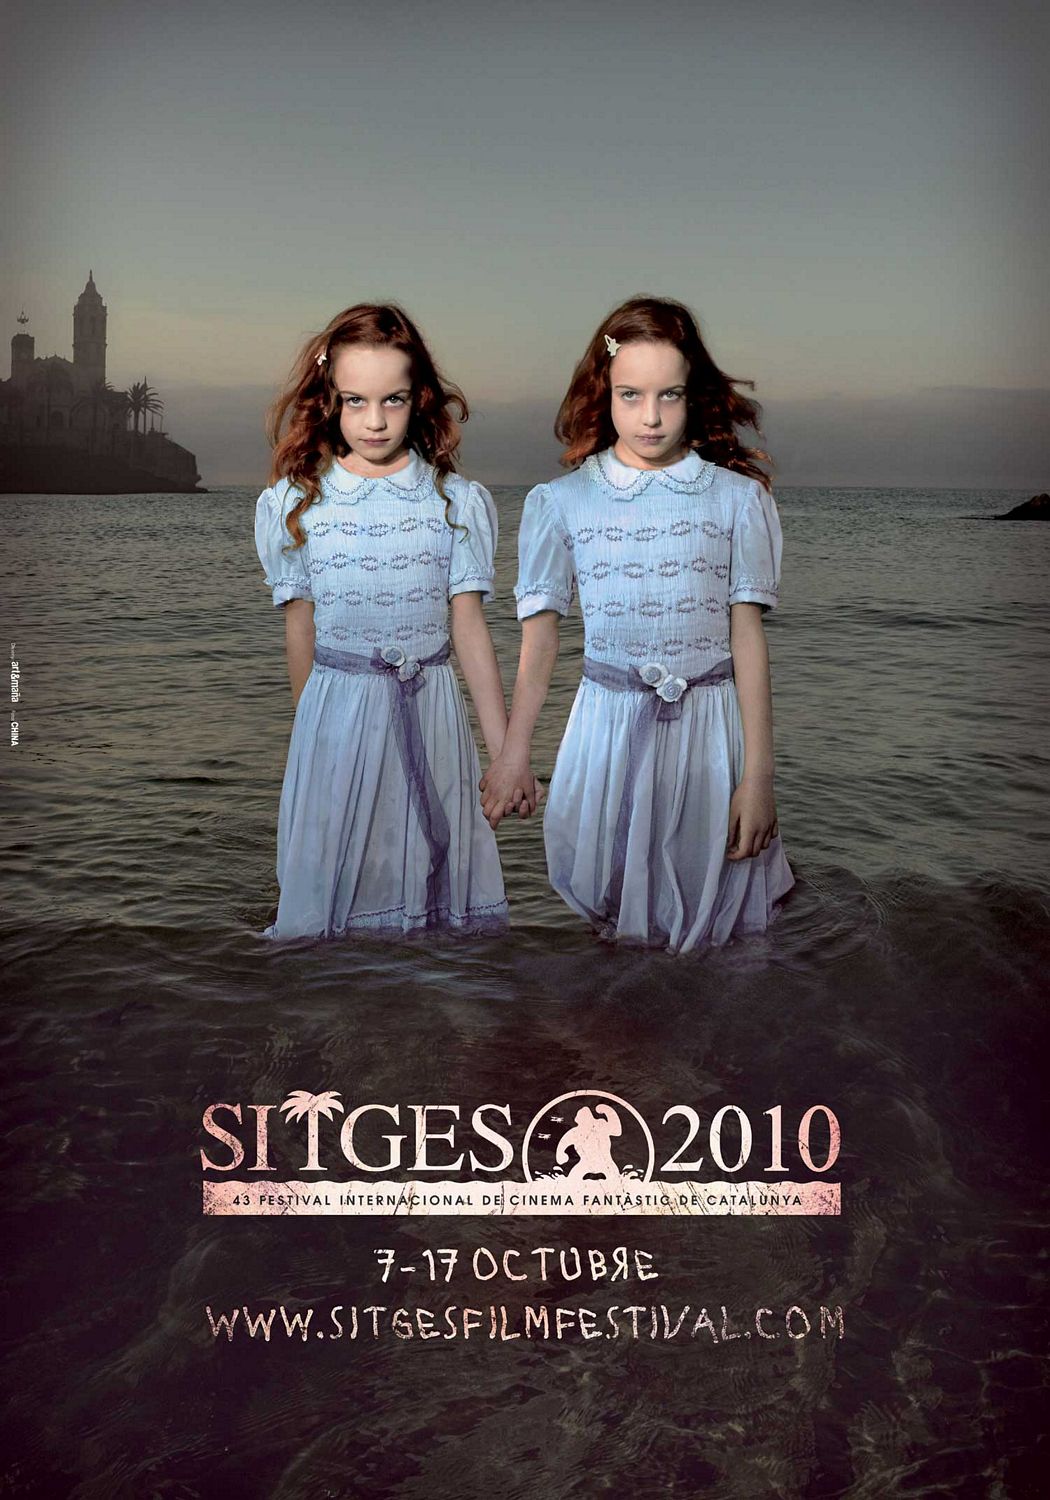 Extra Large TV Poster Image for Sitges Film Festival 